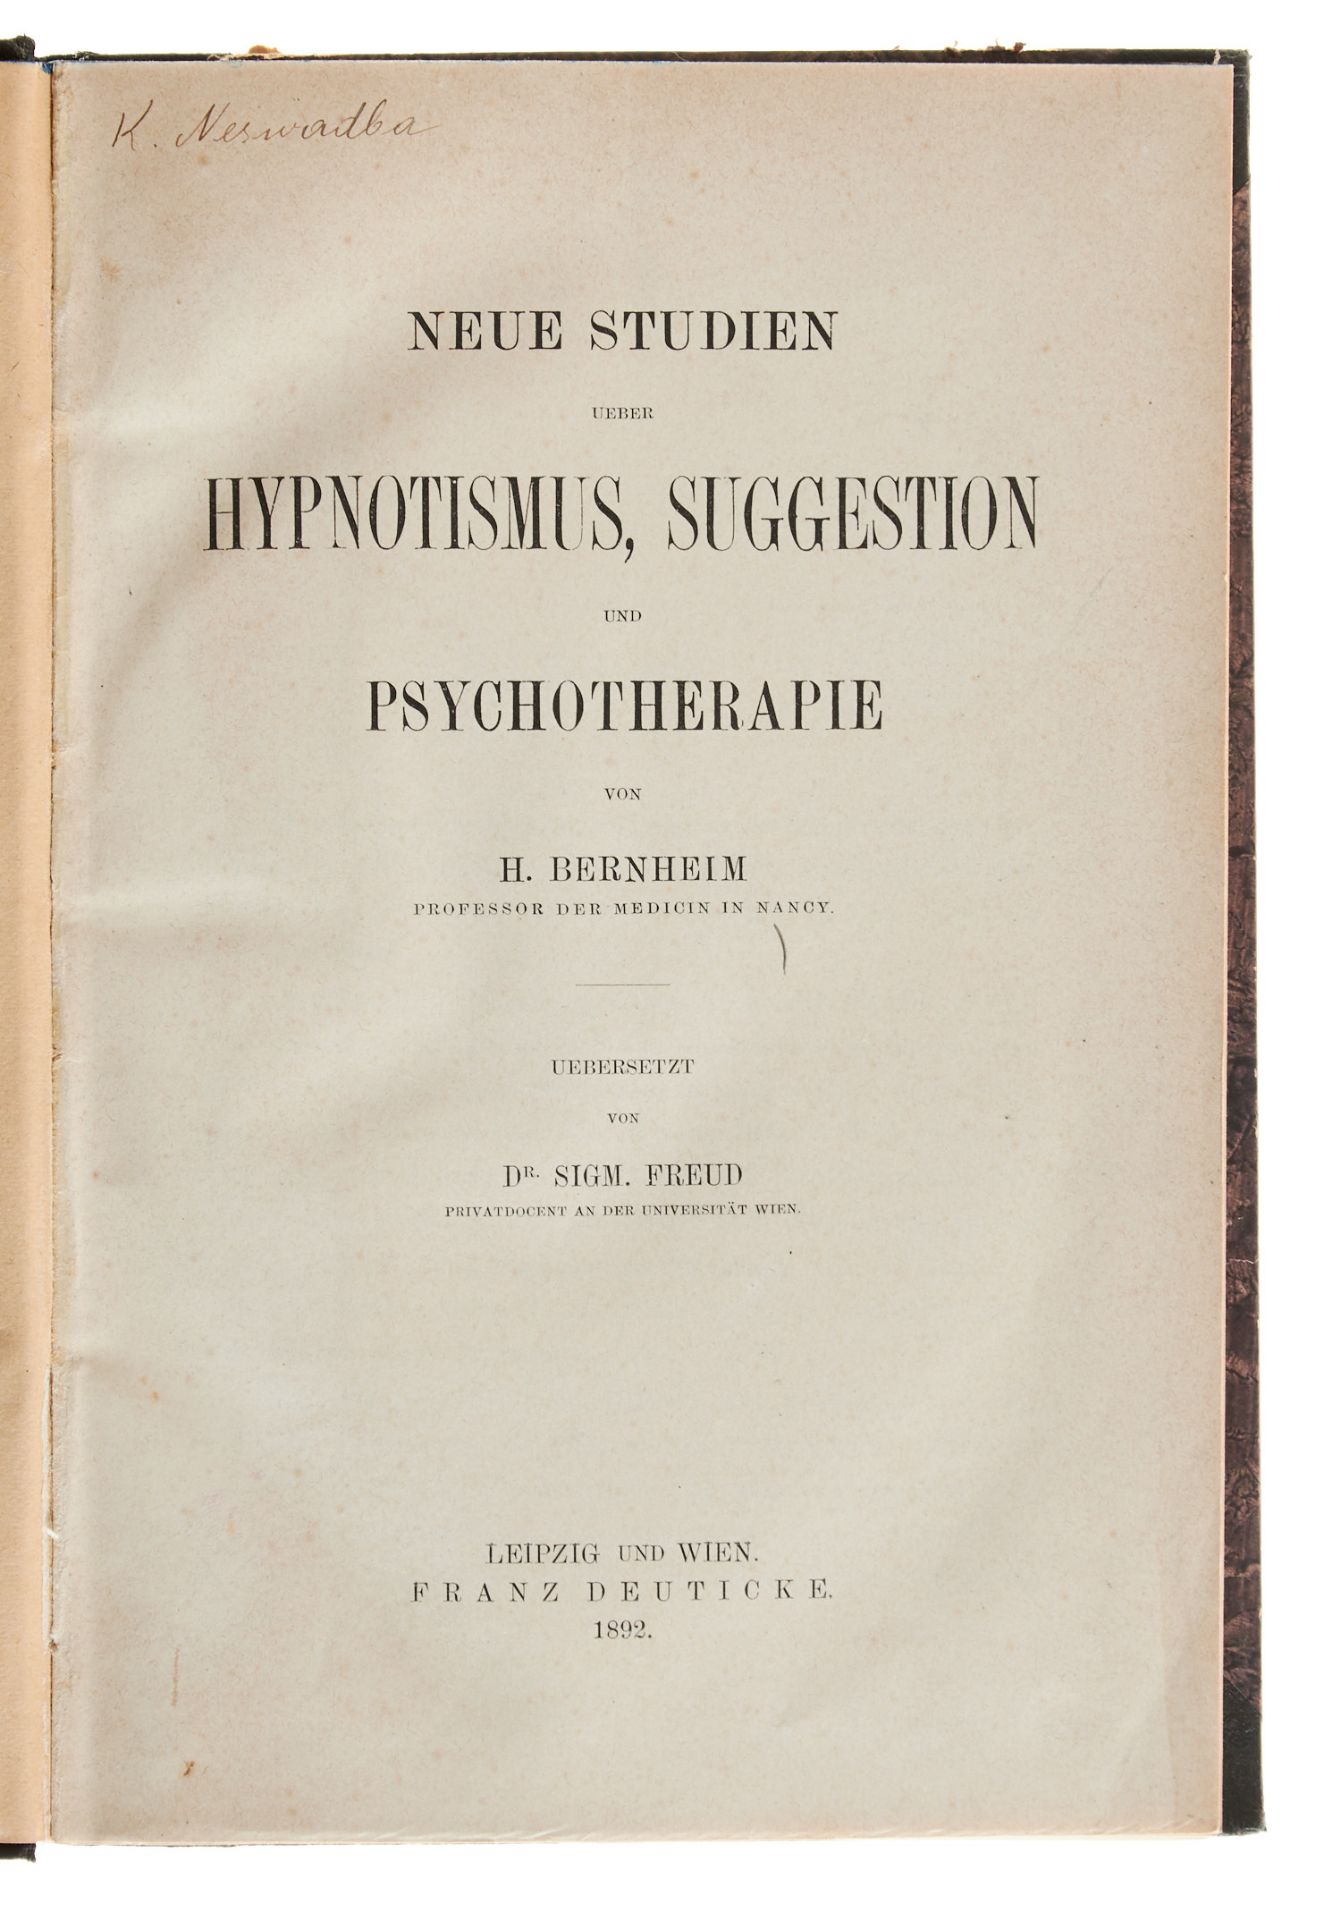 Psychoanalyse - Freud - Bernheim, H., - Image 2 of 2